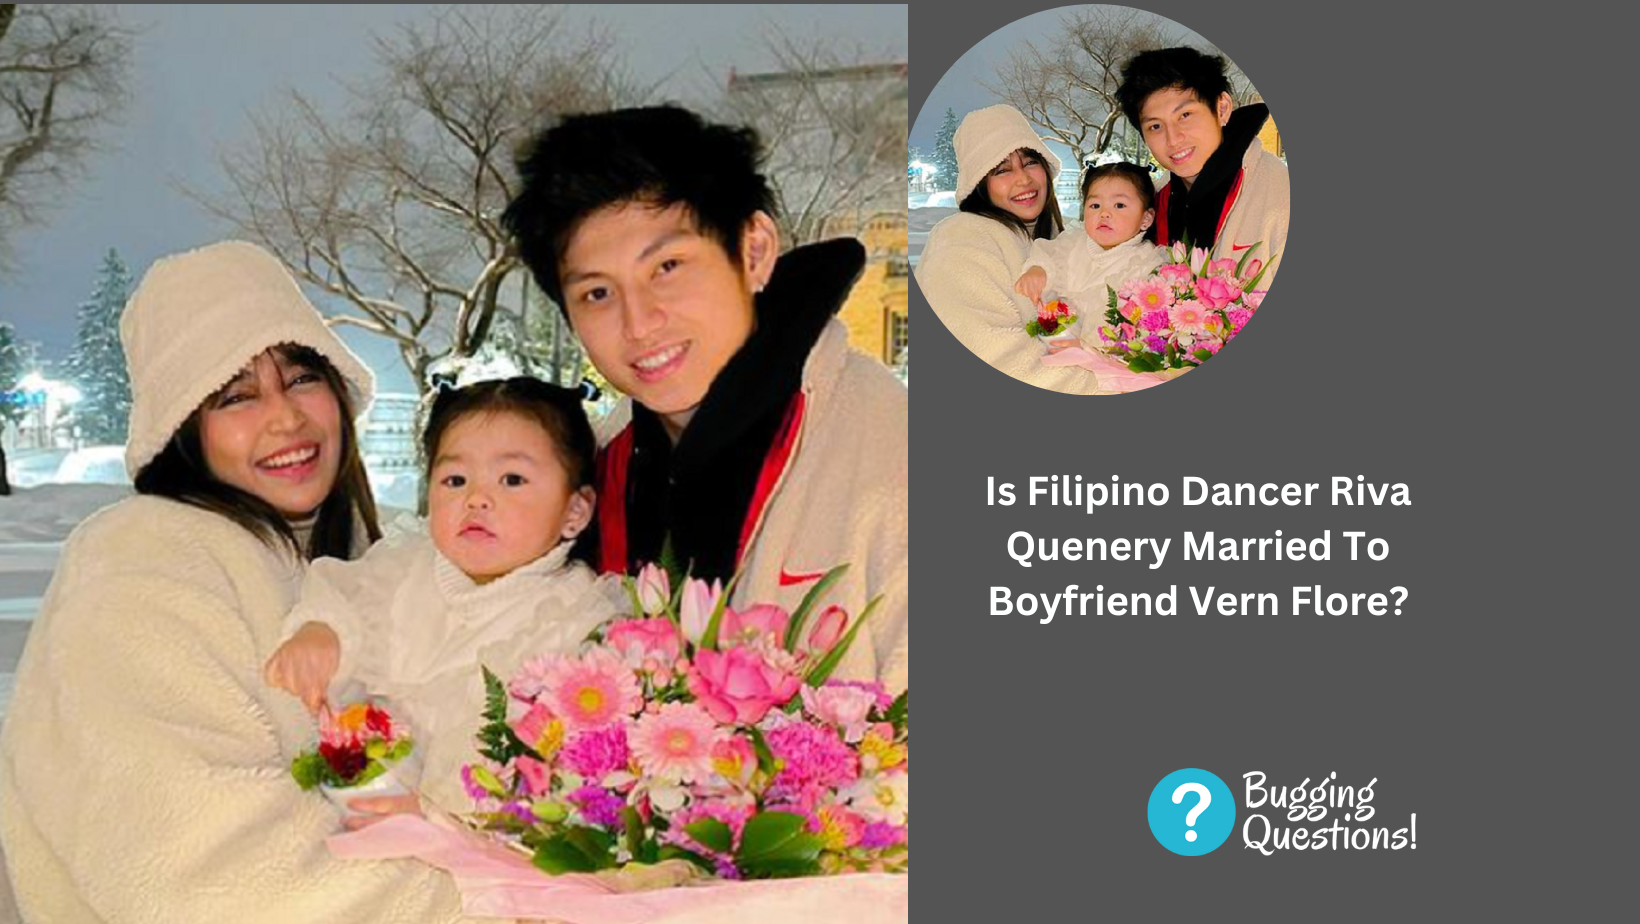 Is Filipino Dancer Riva Quenery Married To Boyfriend Vern Flore?